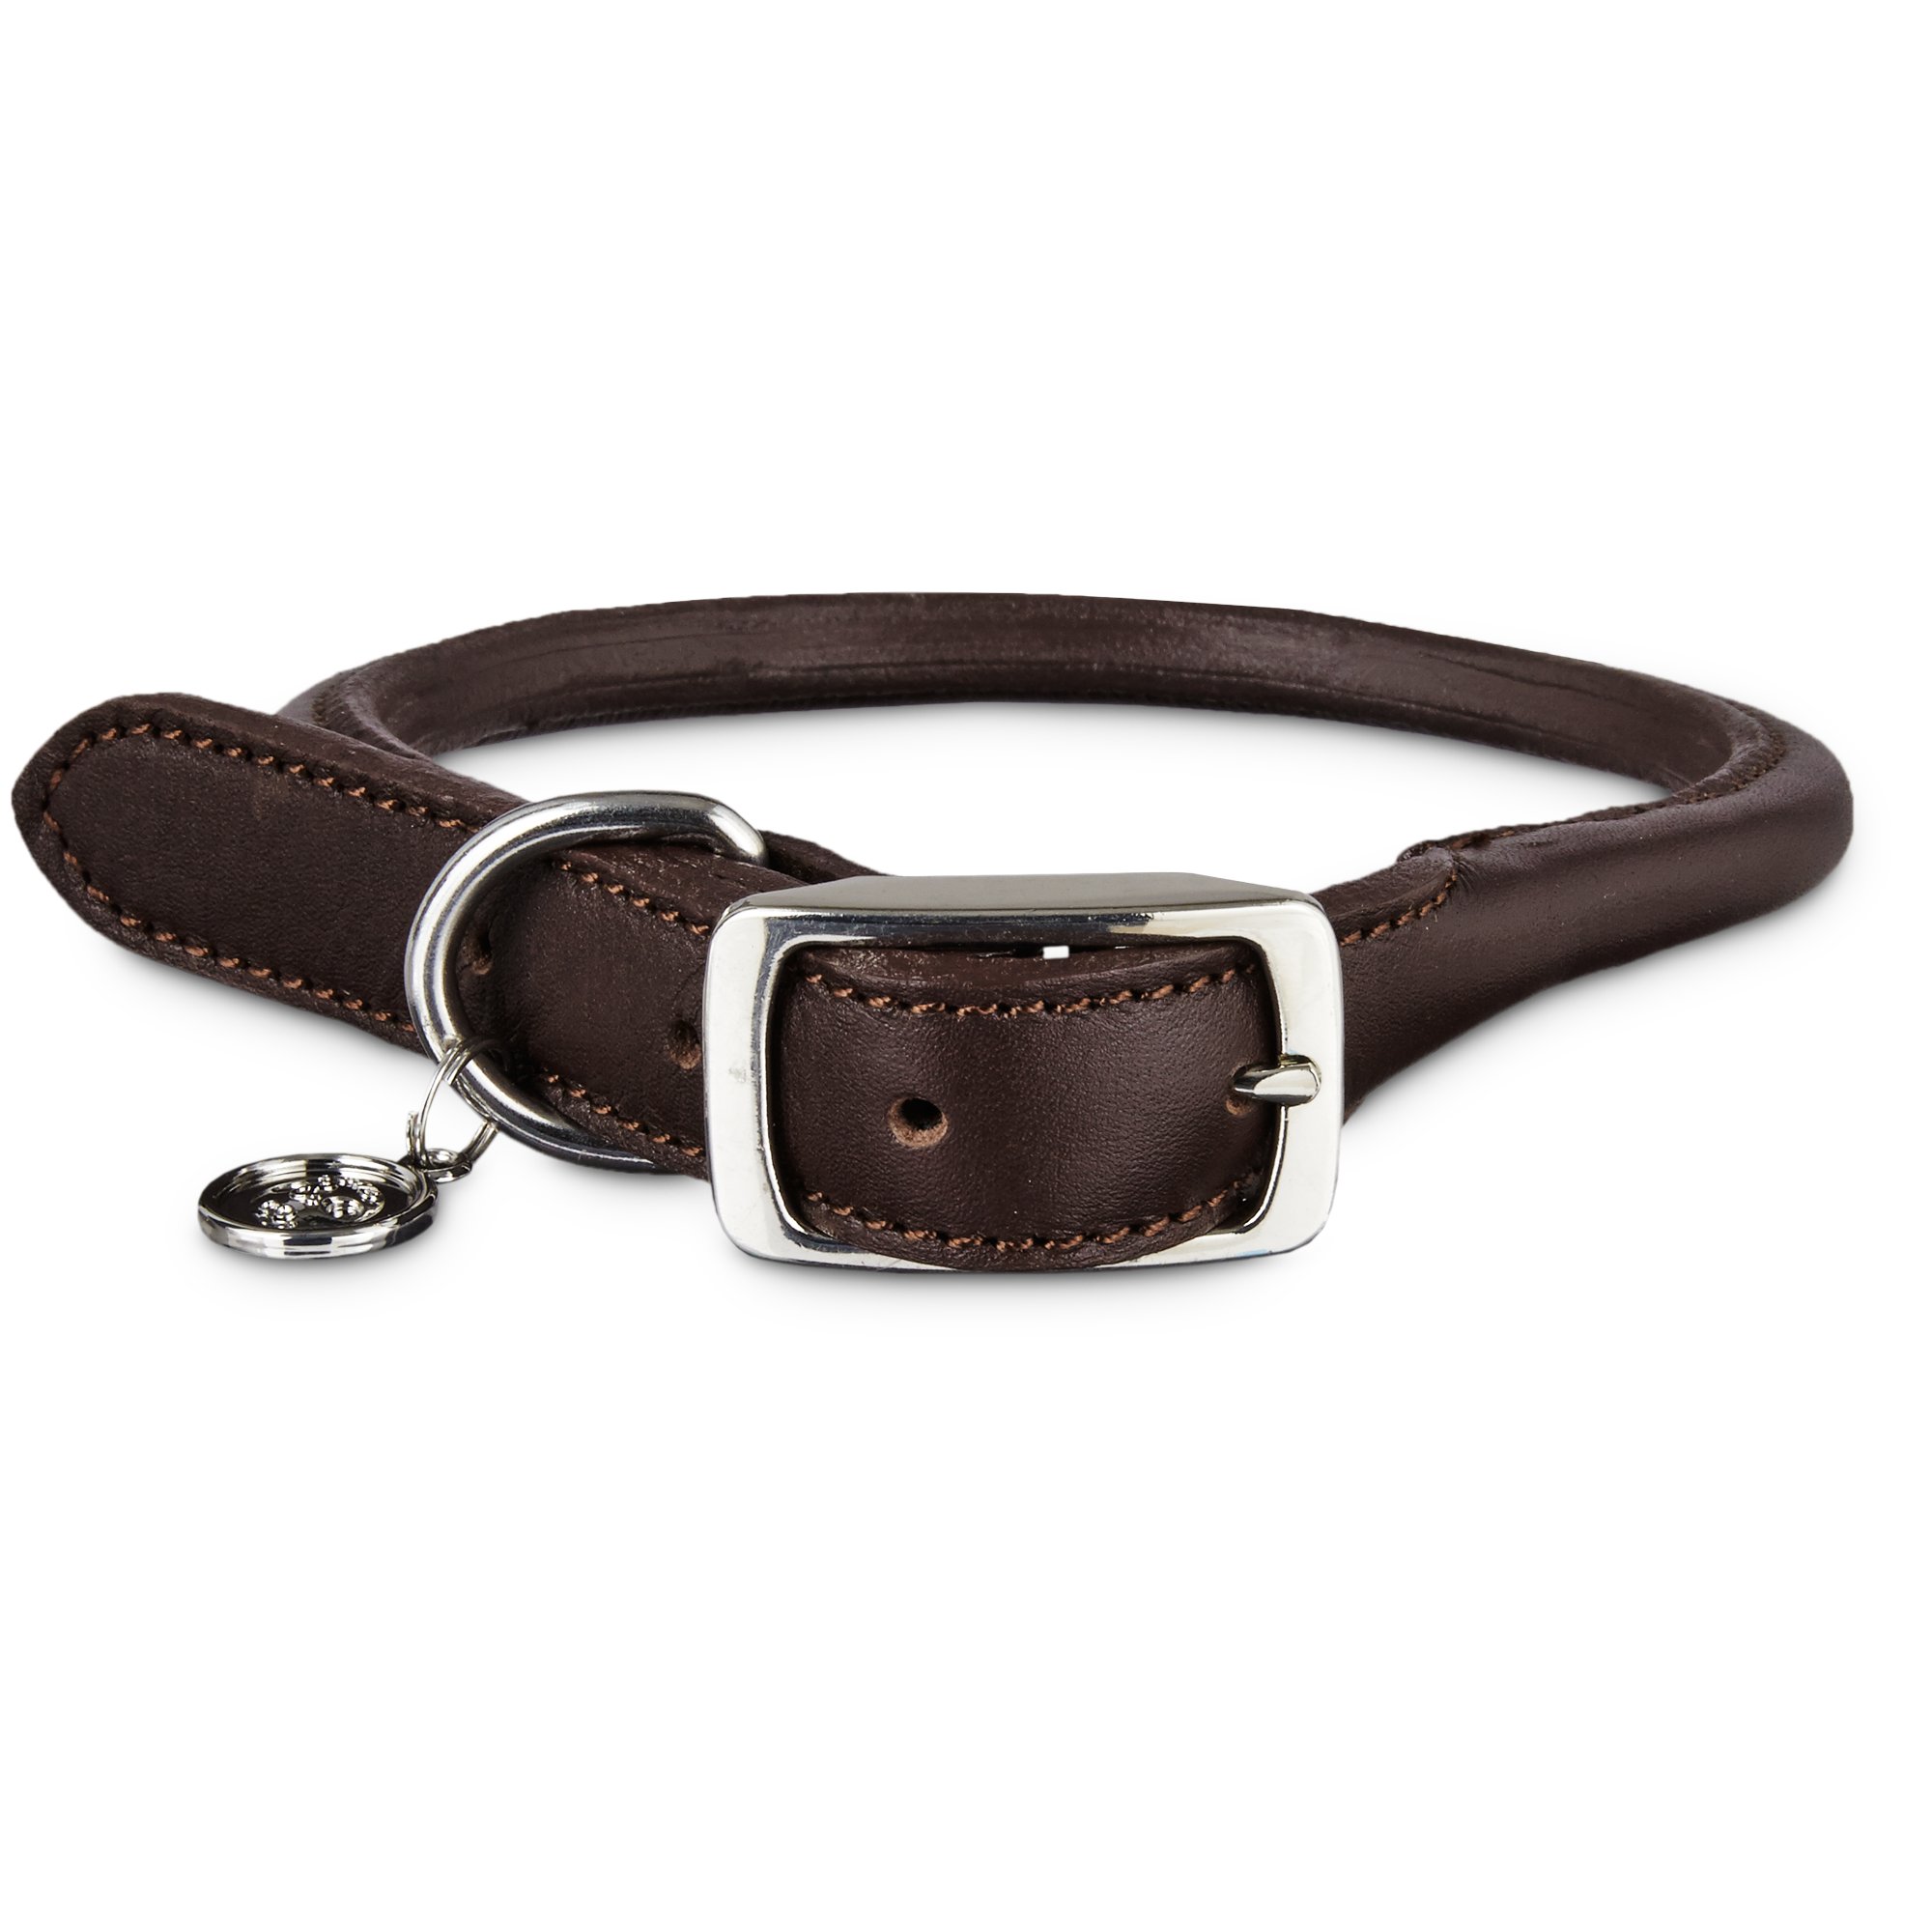 petco leather dog collar